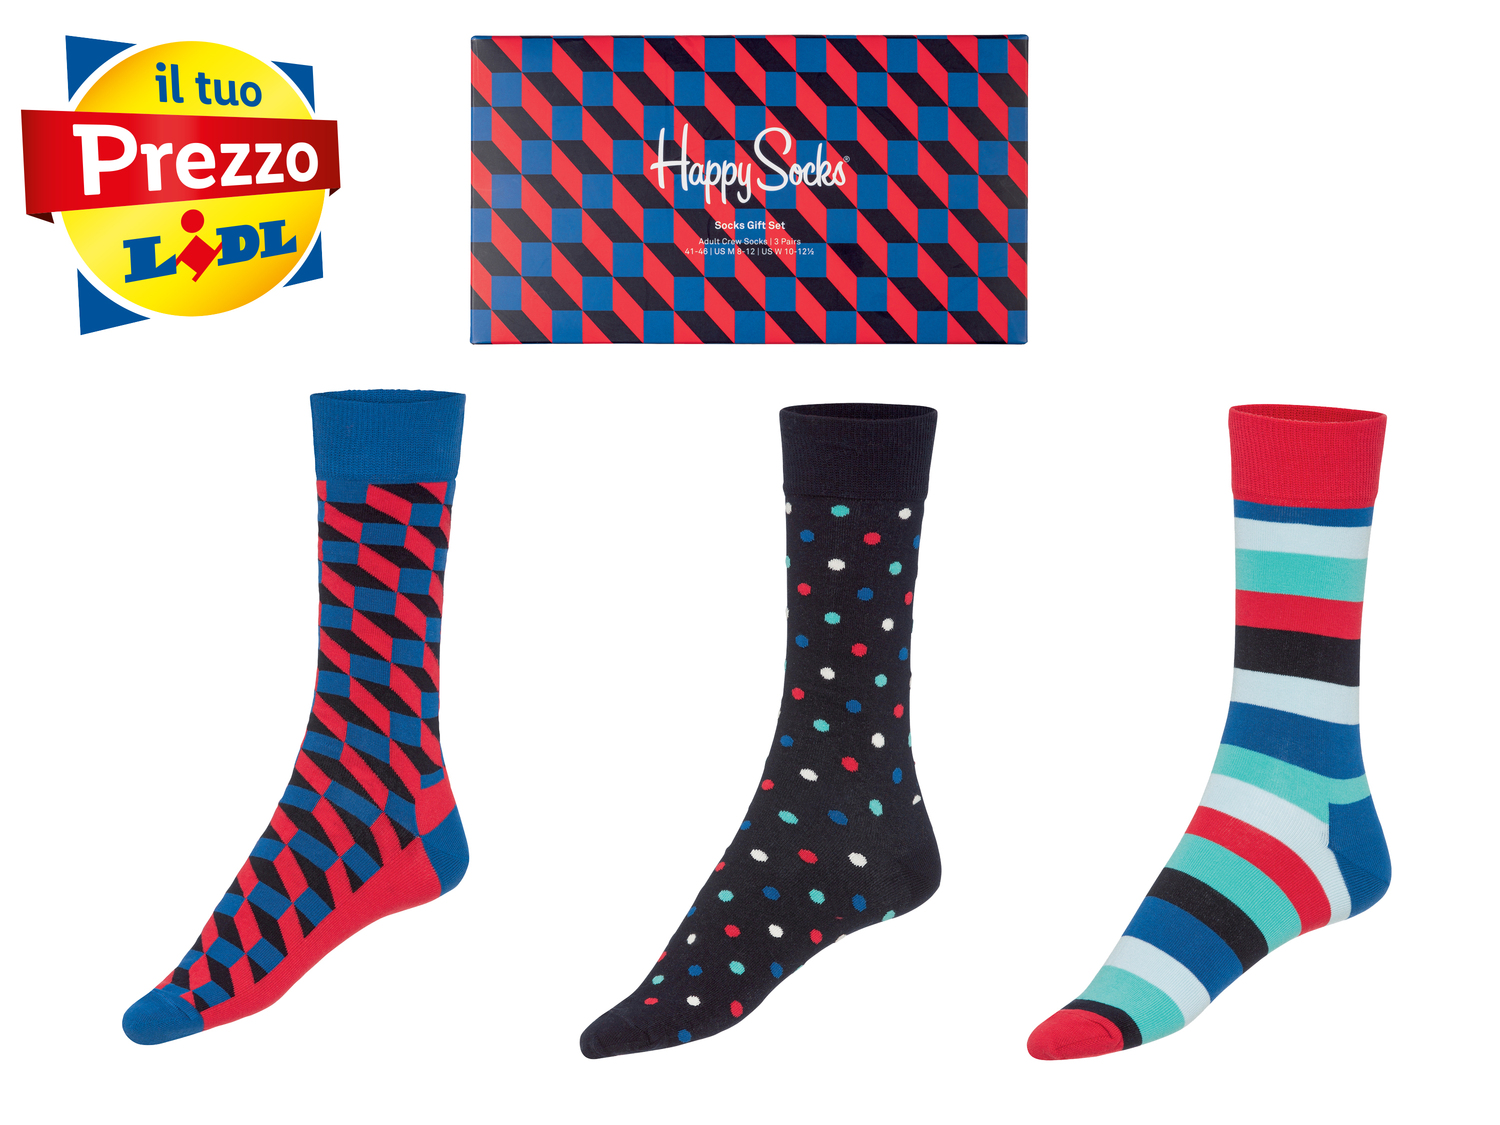 Calze Happy Socks Happy-socks, prezzo 14.99 € 
3 paia - Misure: 36-46
Taglie ...